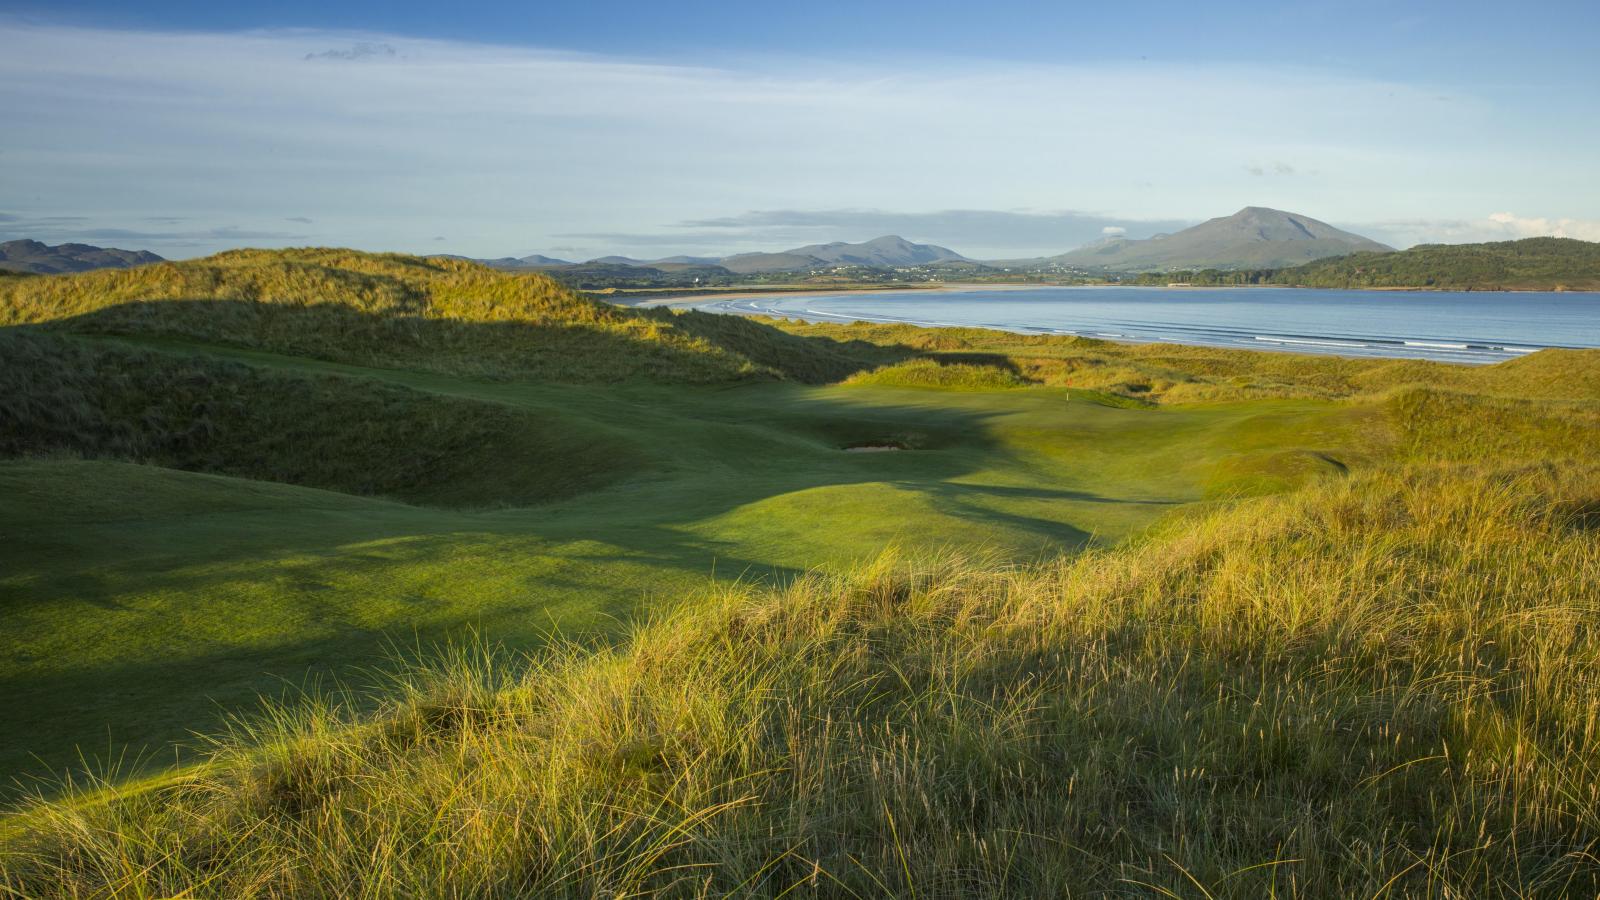 Undulating hills comprise the Sandy Hills Golf Links Course at Rosapenna Golf Resort, Ireland